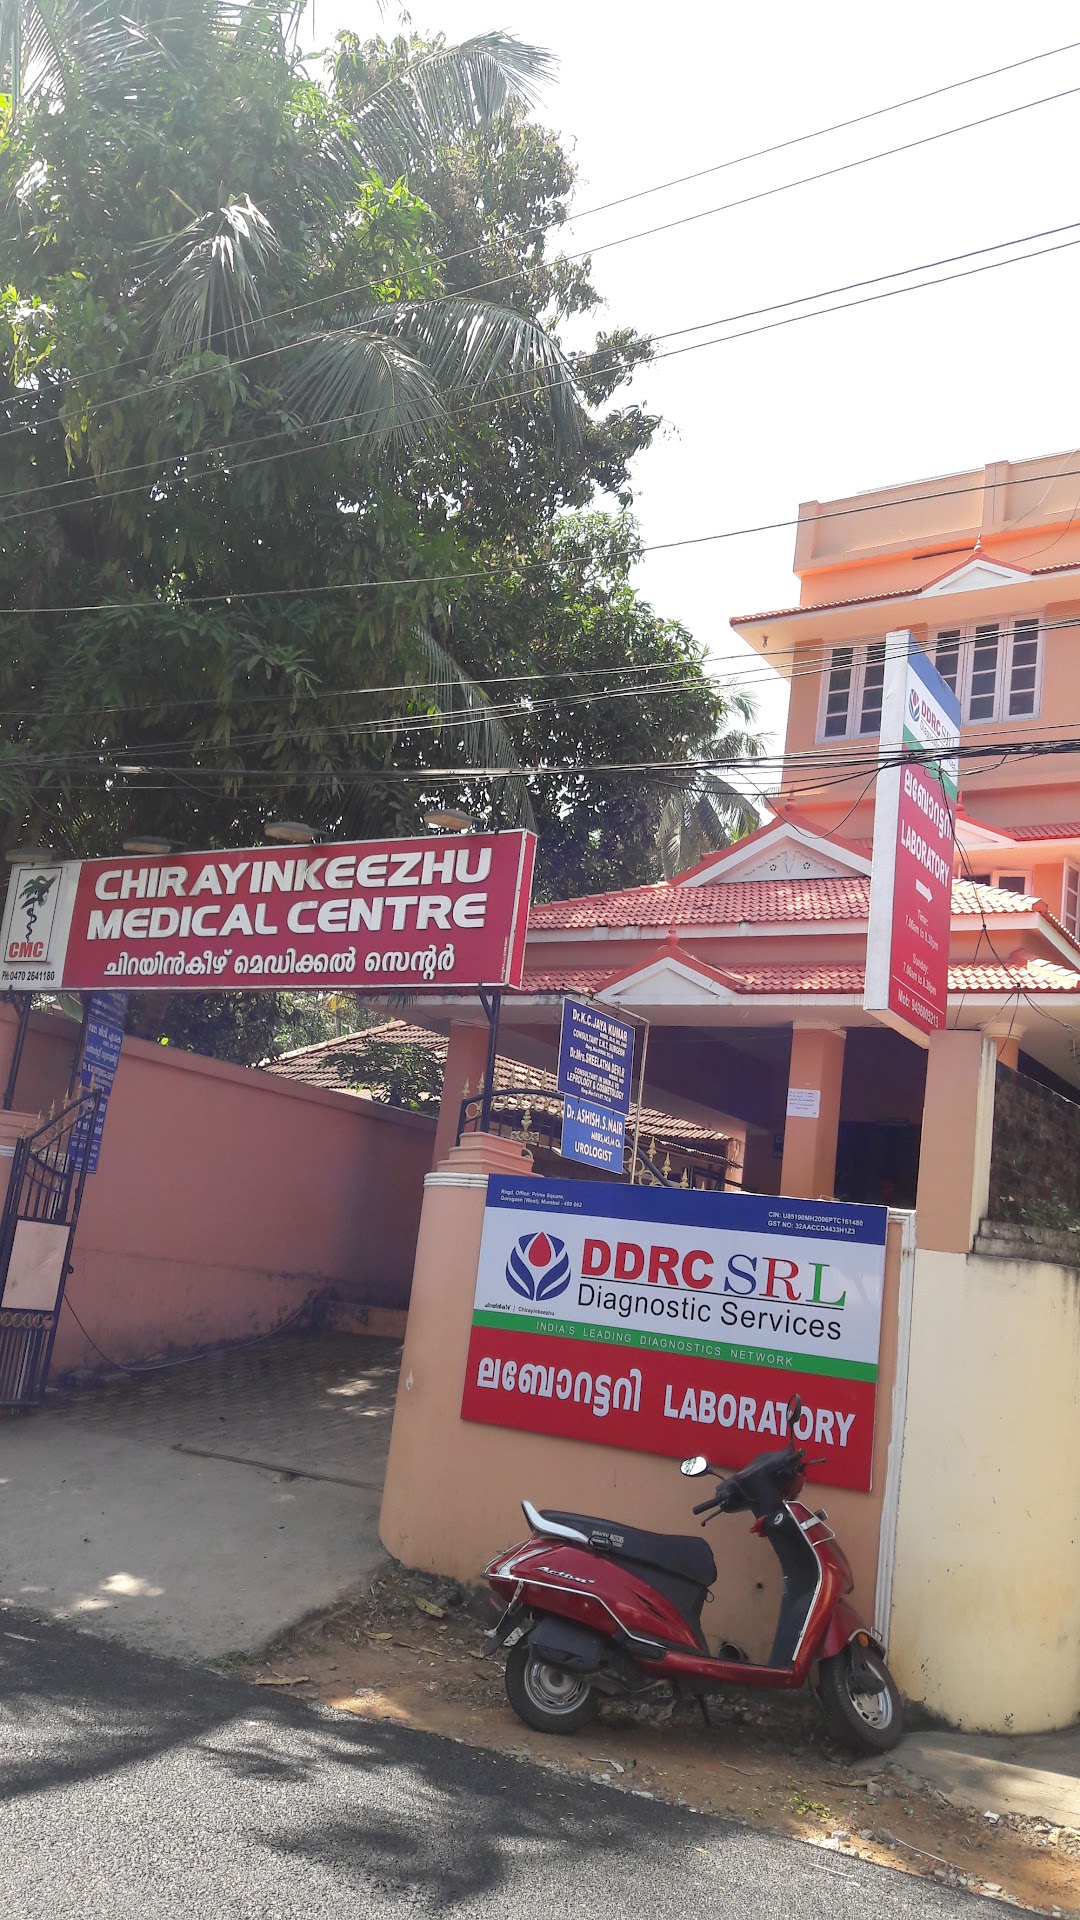 Chirayinkeezhu Medical Centre